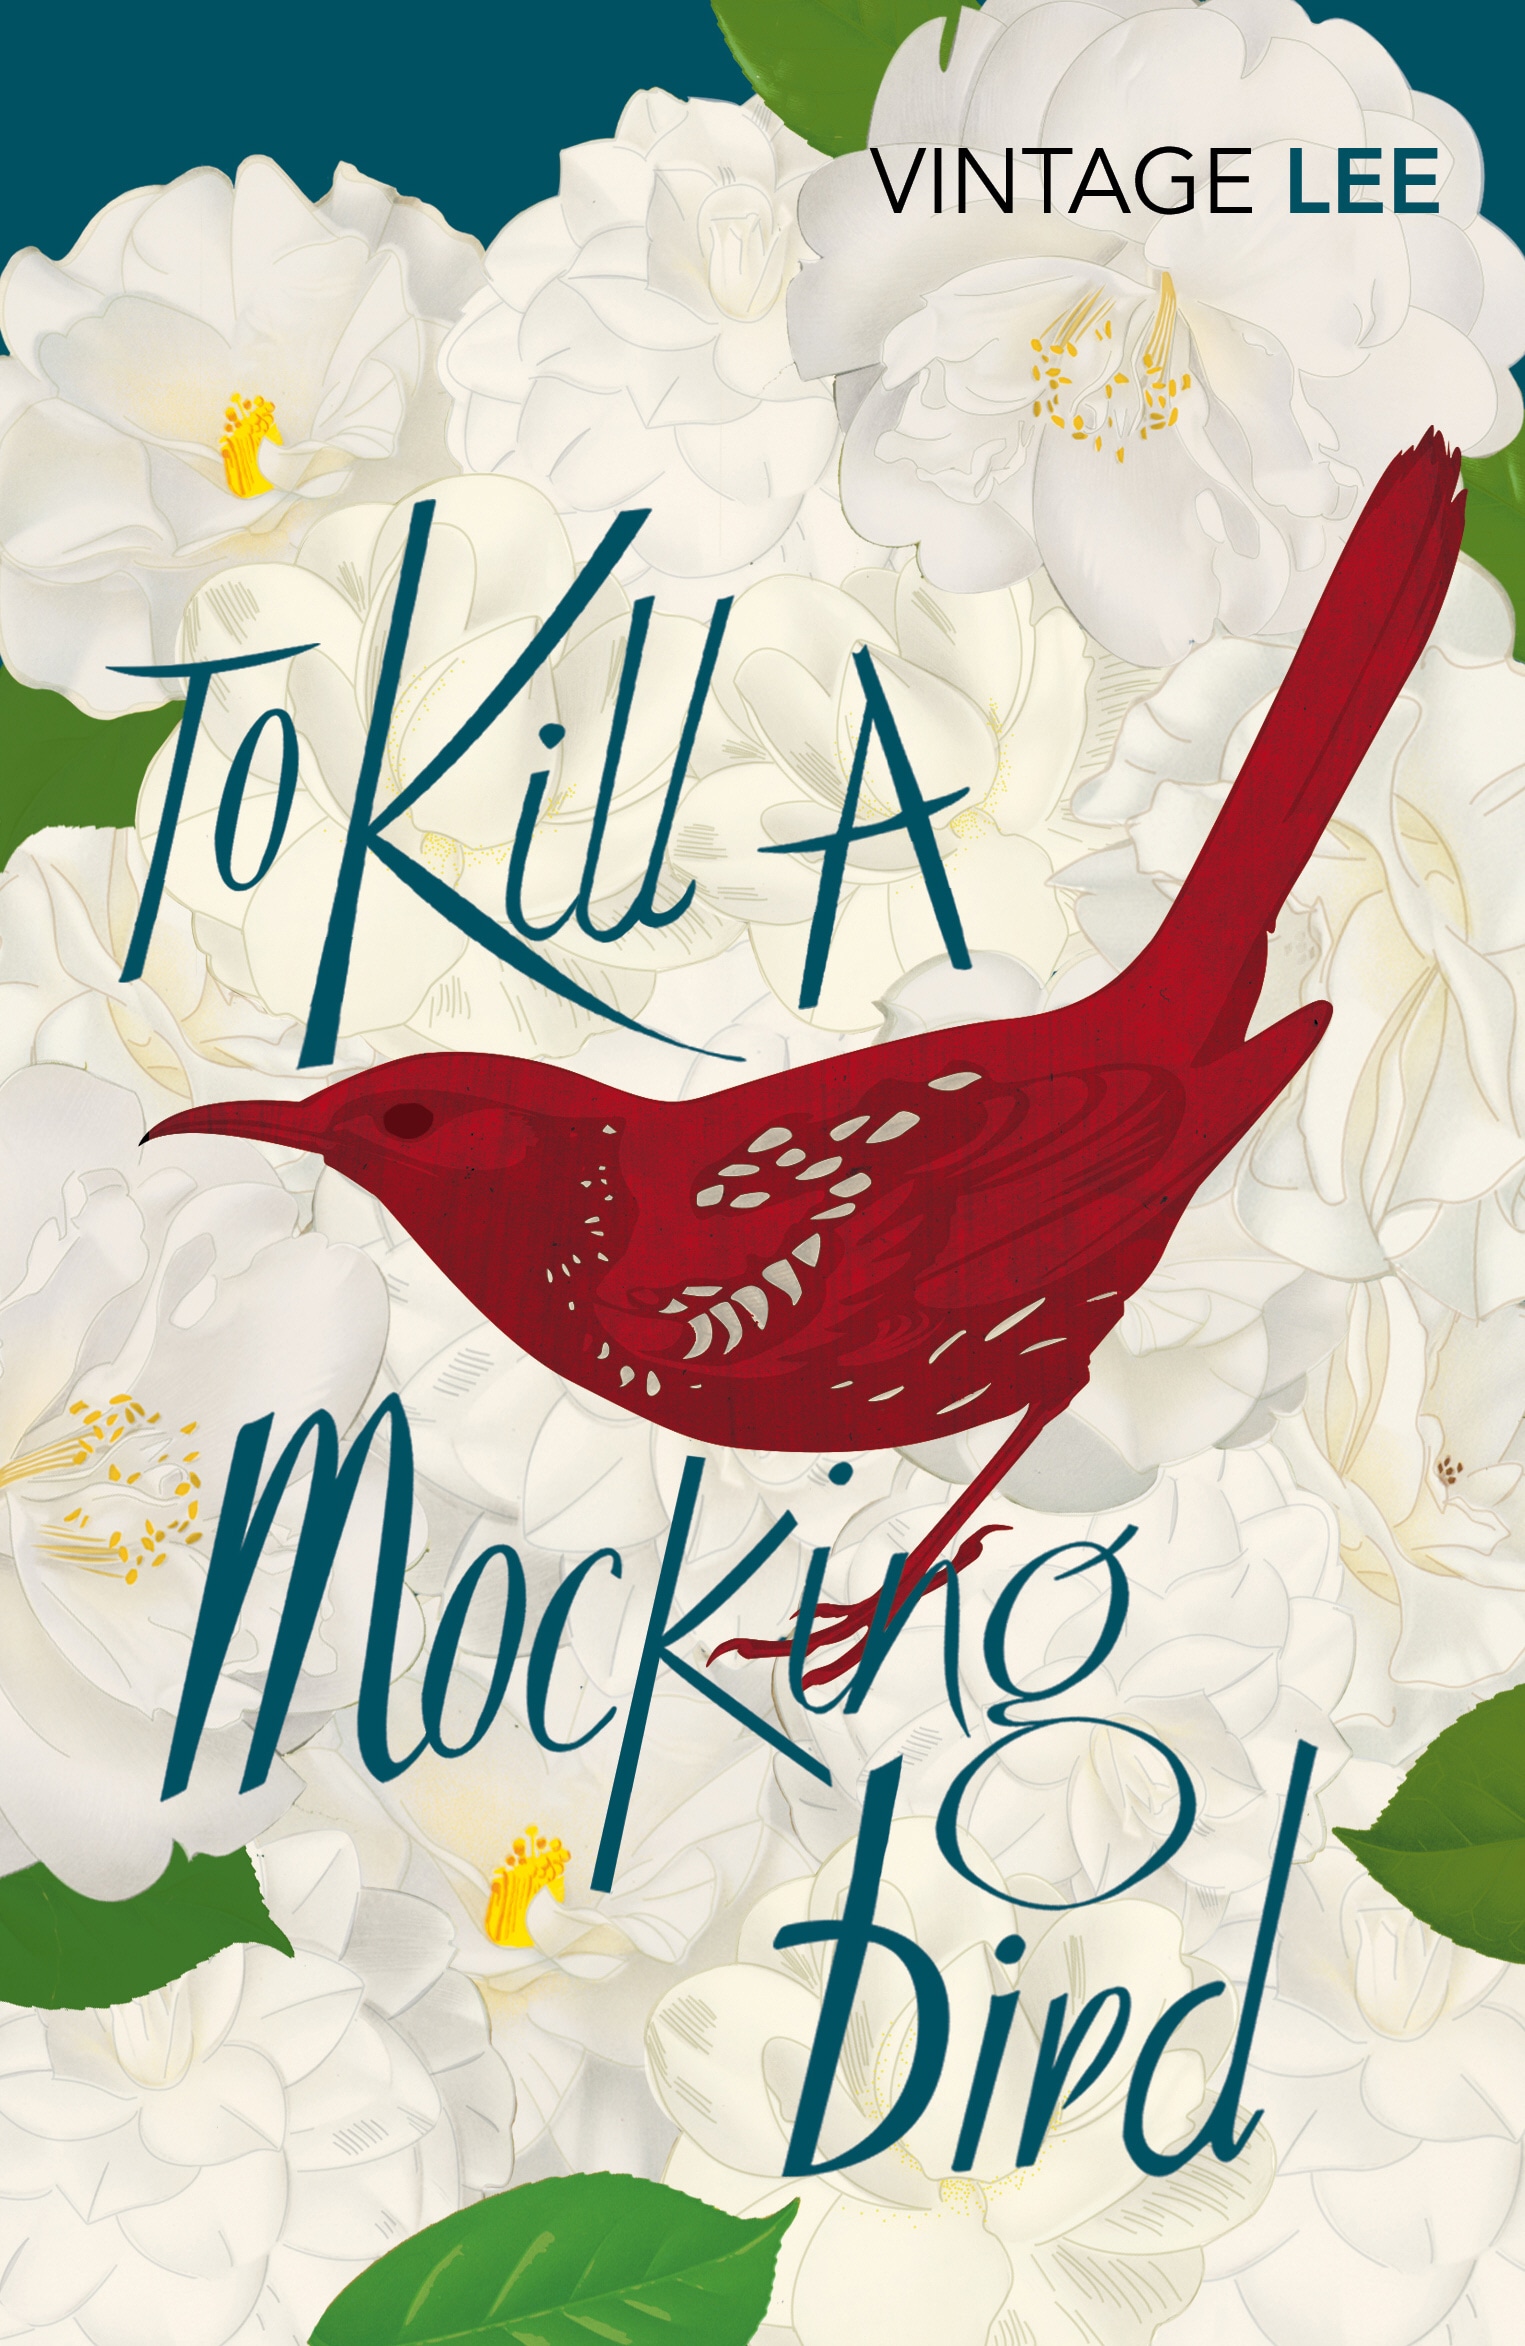 Book “To Kill A Mockingbird” by Harper Lee — February 5, 2004